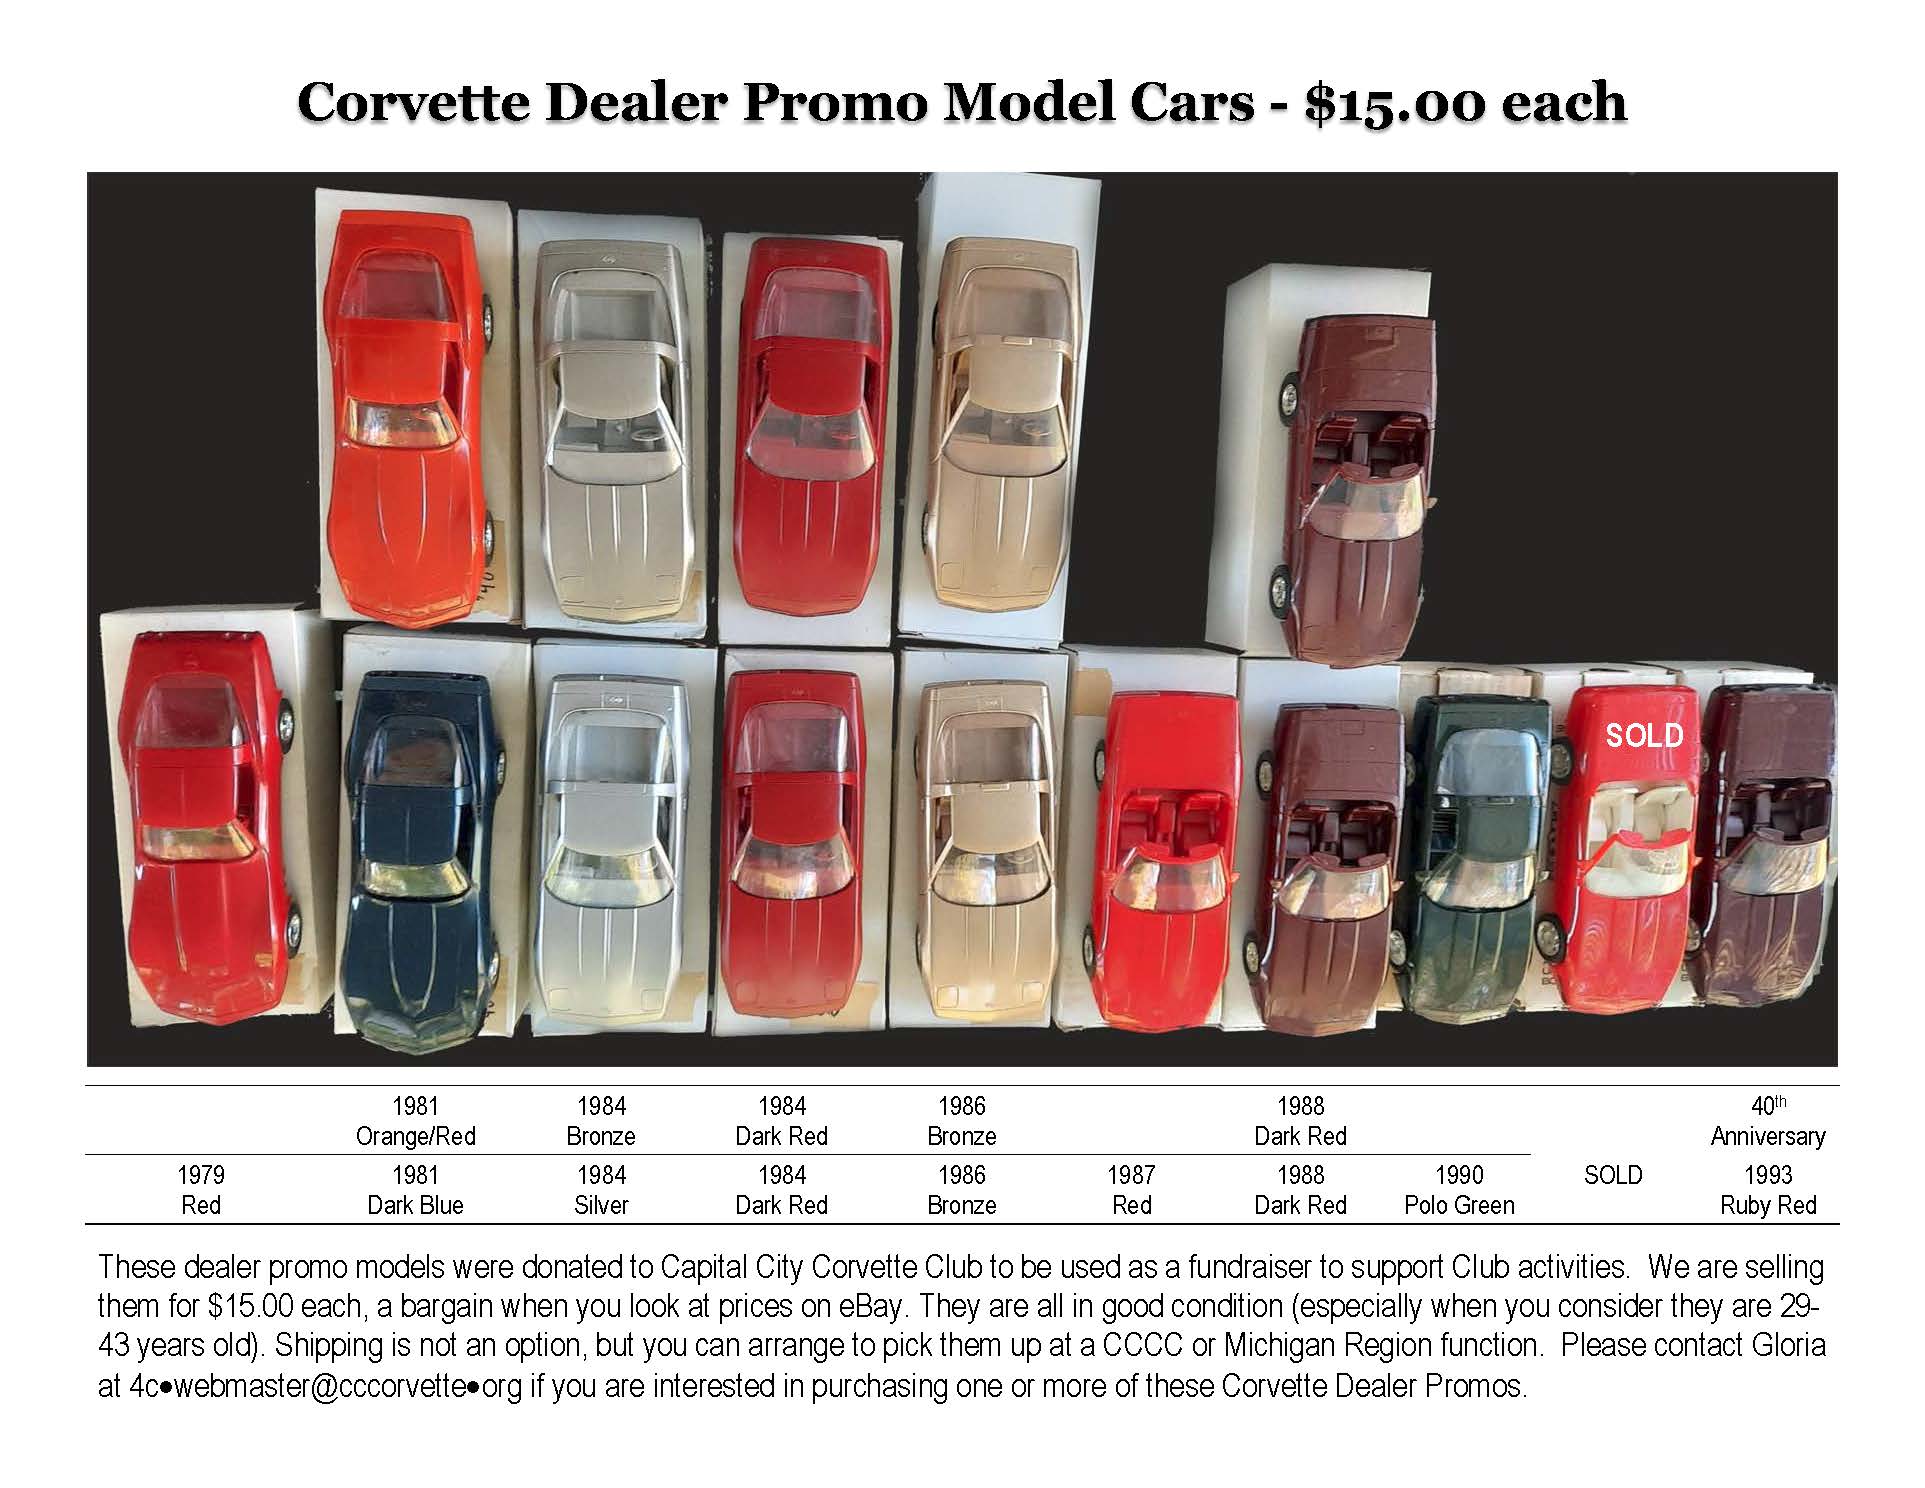 Dealer Promo Corvettes for sale.